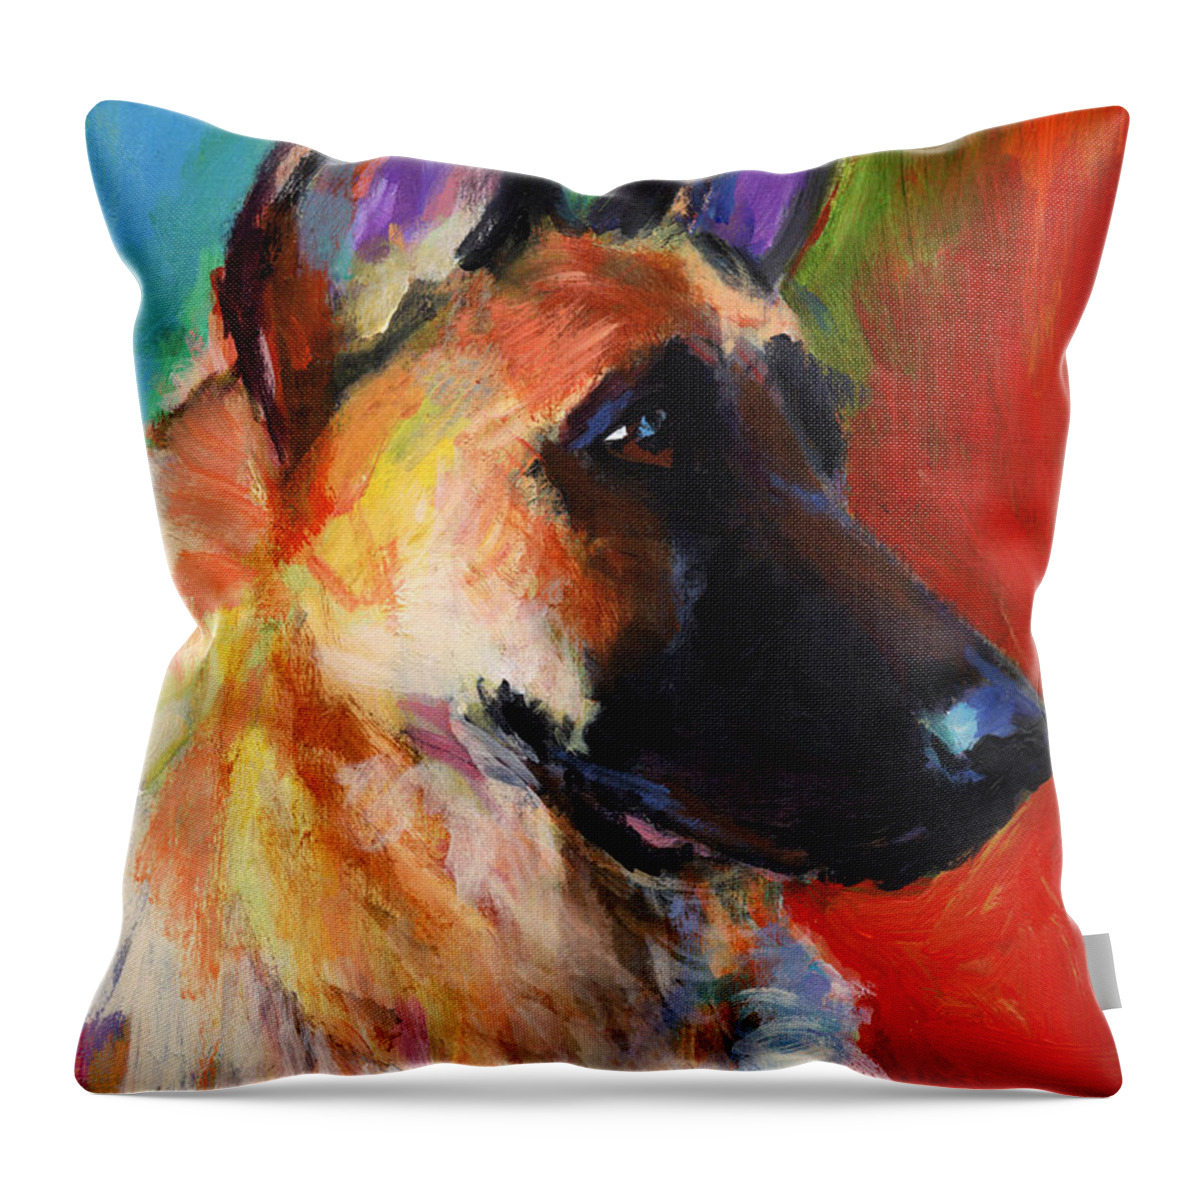 German Shepherd Throw Pillow featuring the painting German Shepherd Dog portrait by Svetlana Novikova